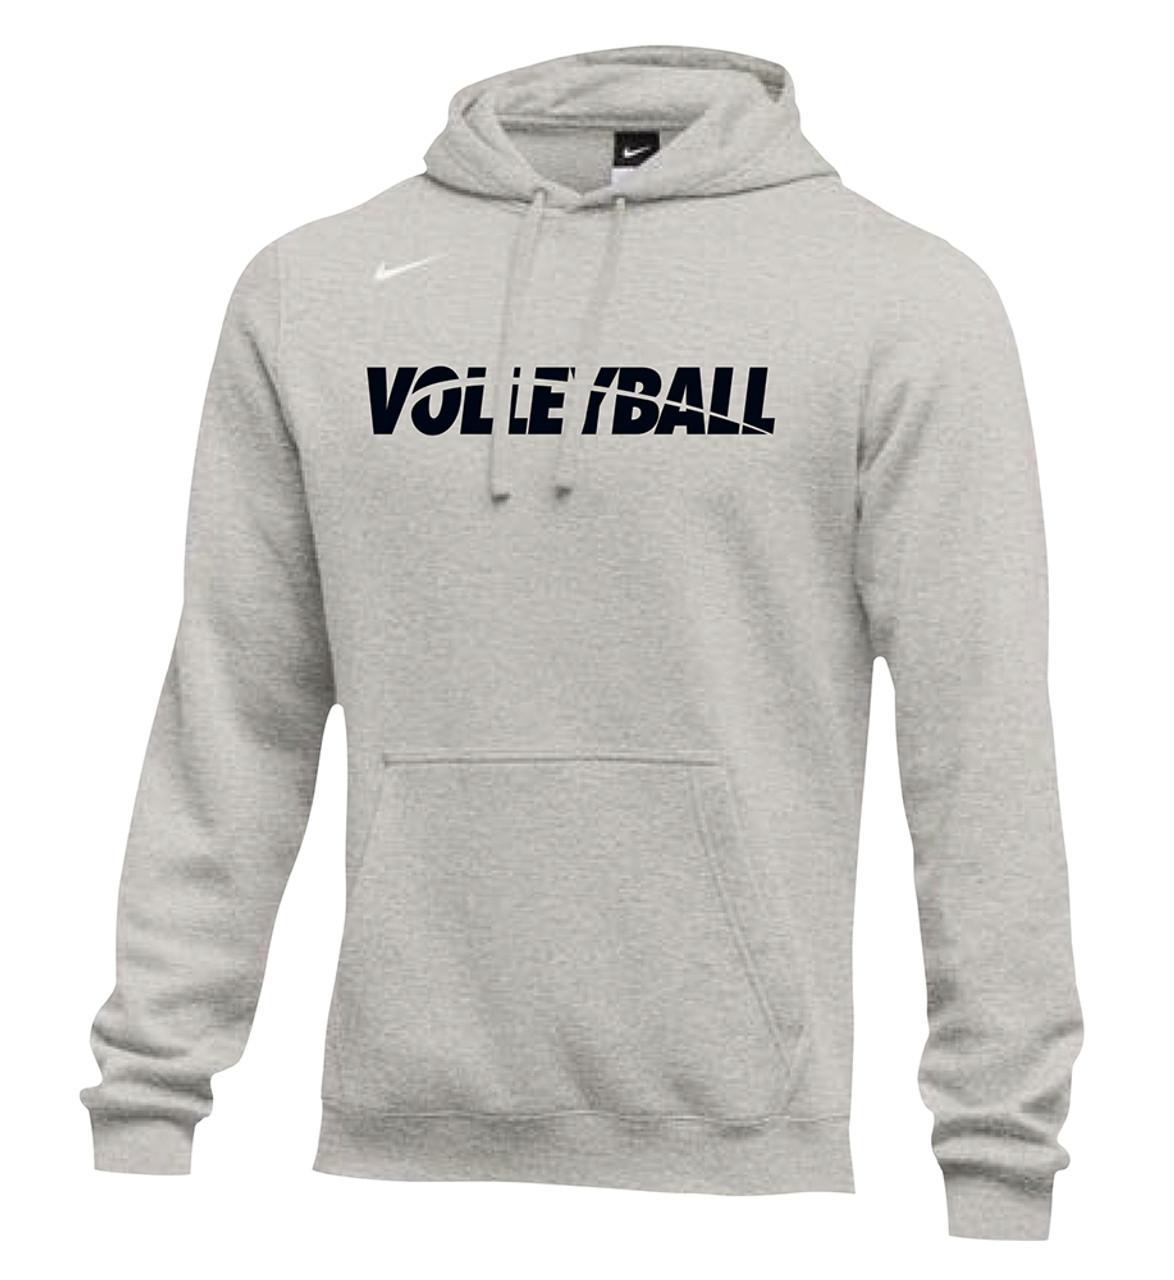 Nike Men's Volleyball Club Fleece Hoodie - Grey/Black New Specials ...